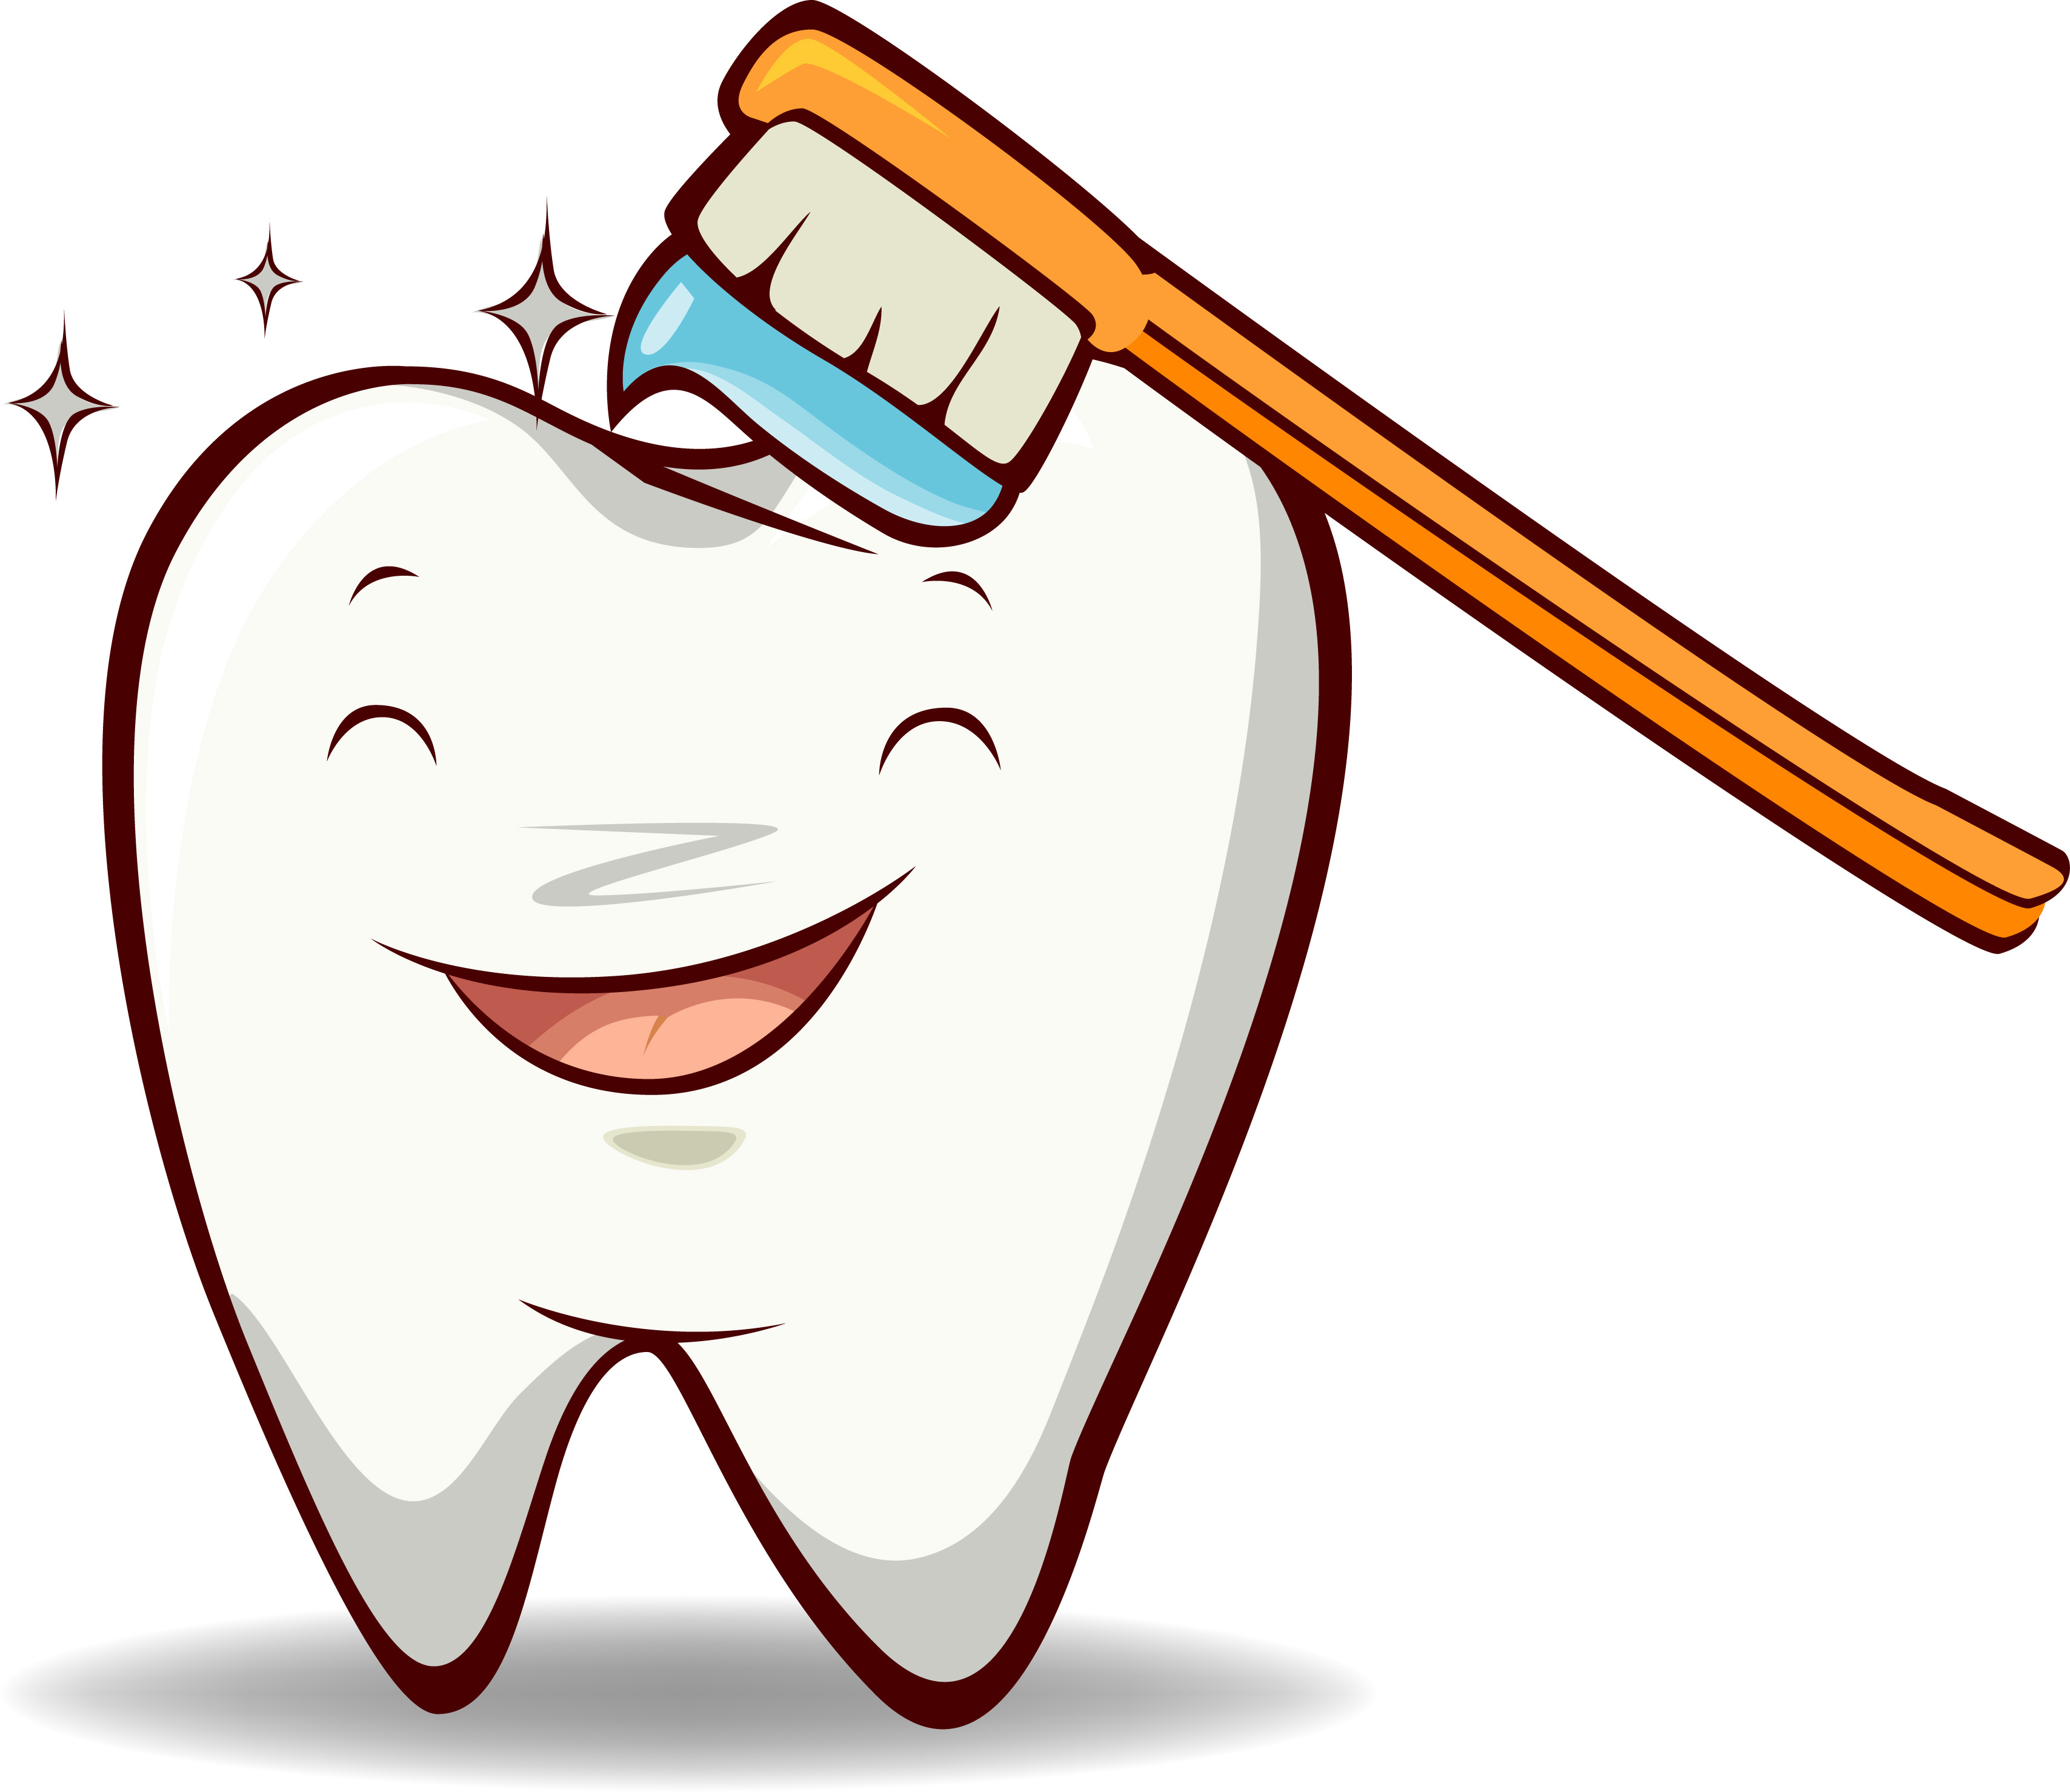 Images For > Dental Tooth Illustration